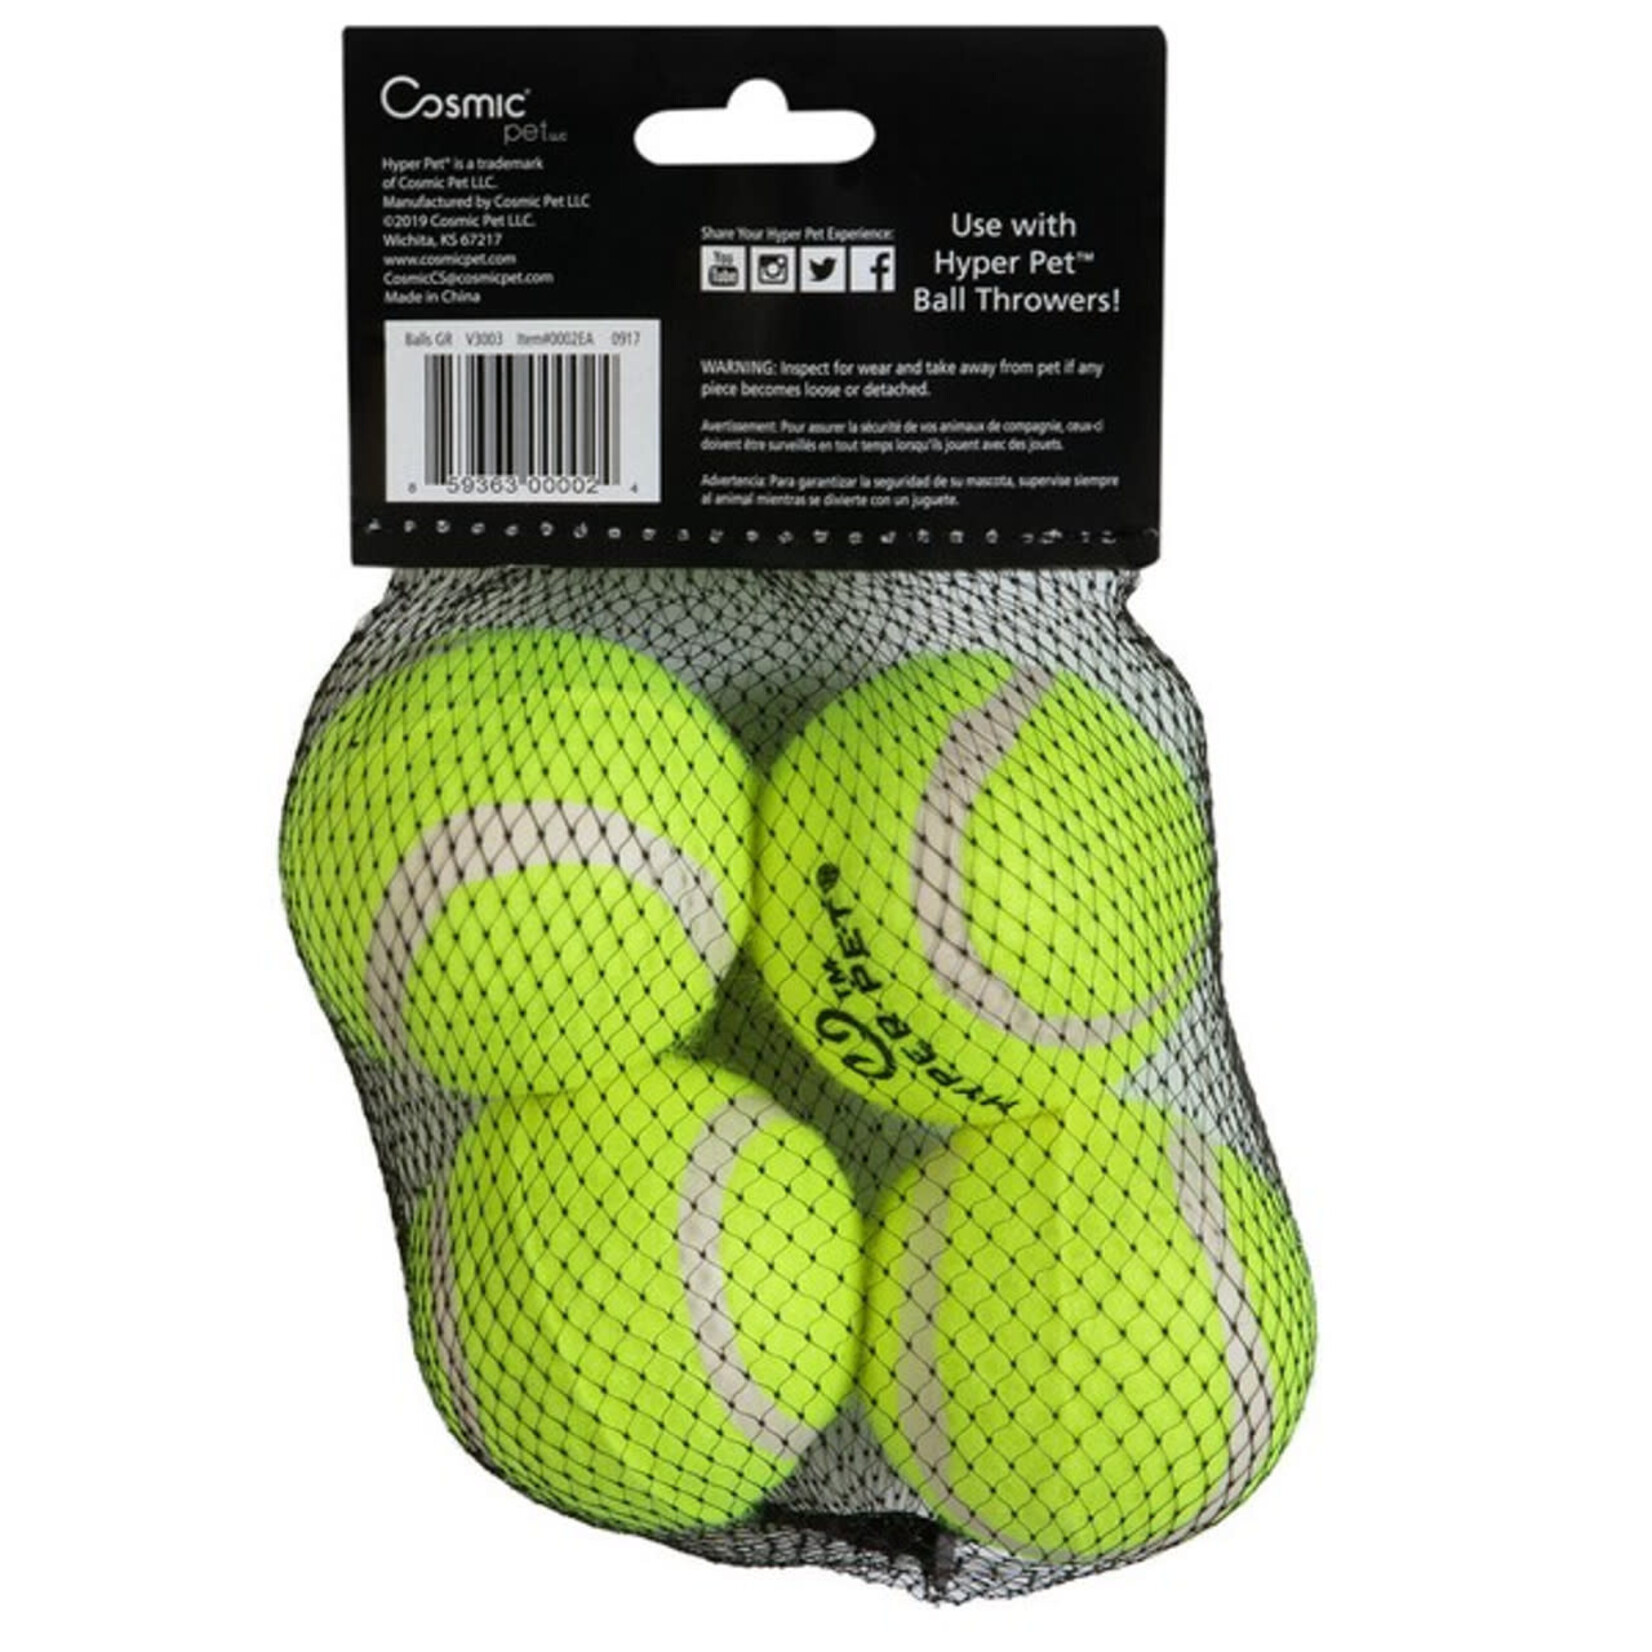 Hyper Pet Tennis Balls Dog Toy in Green, 4 pack